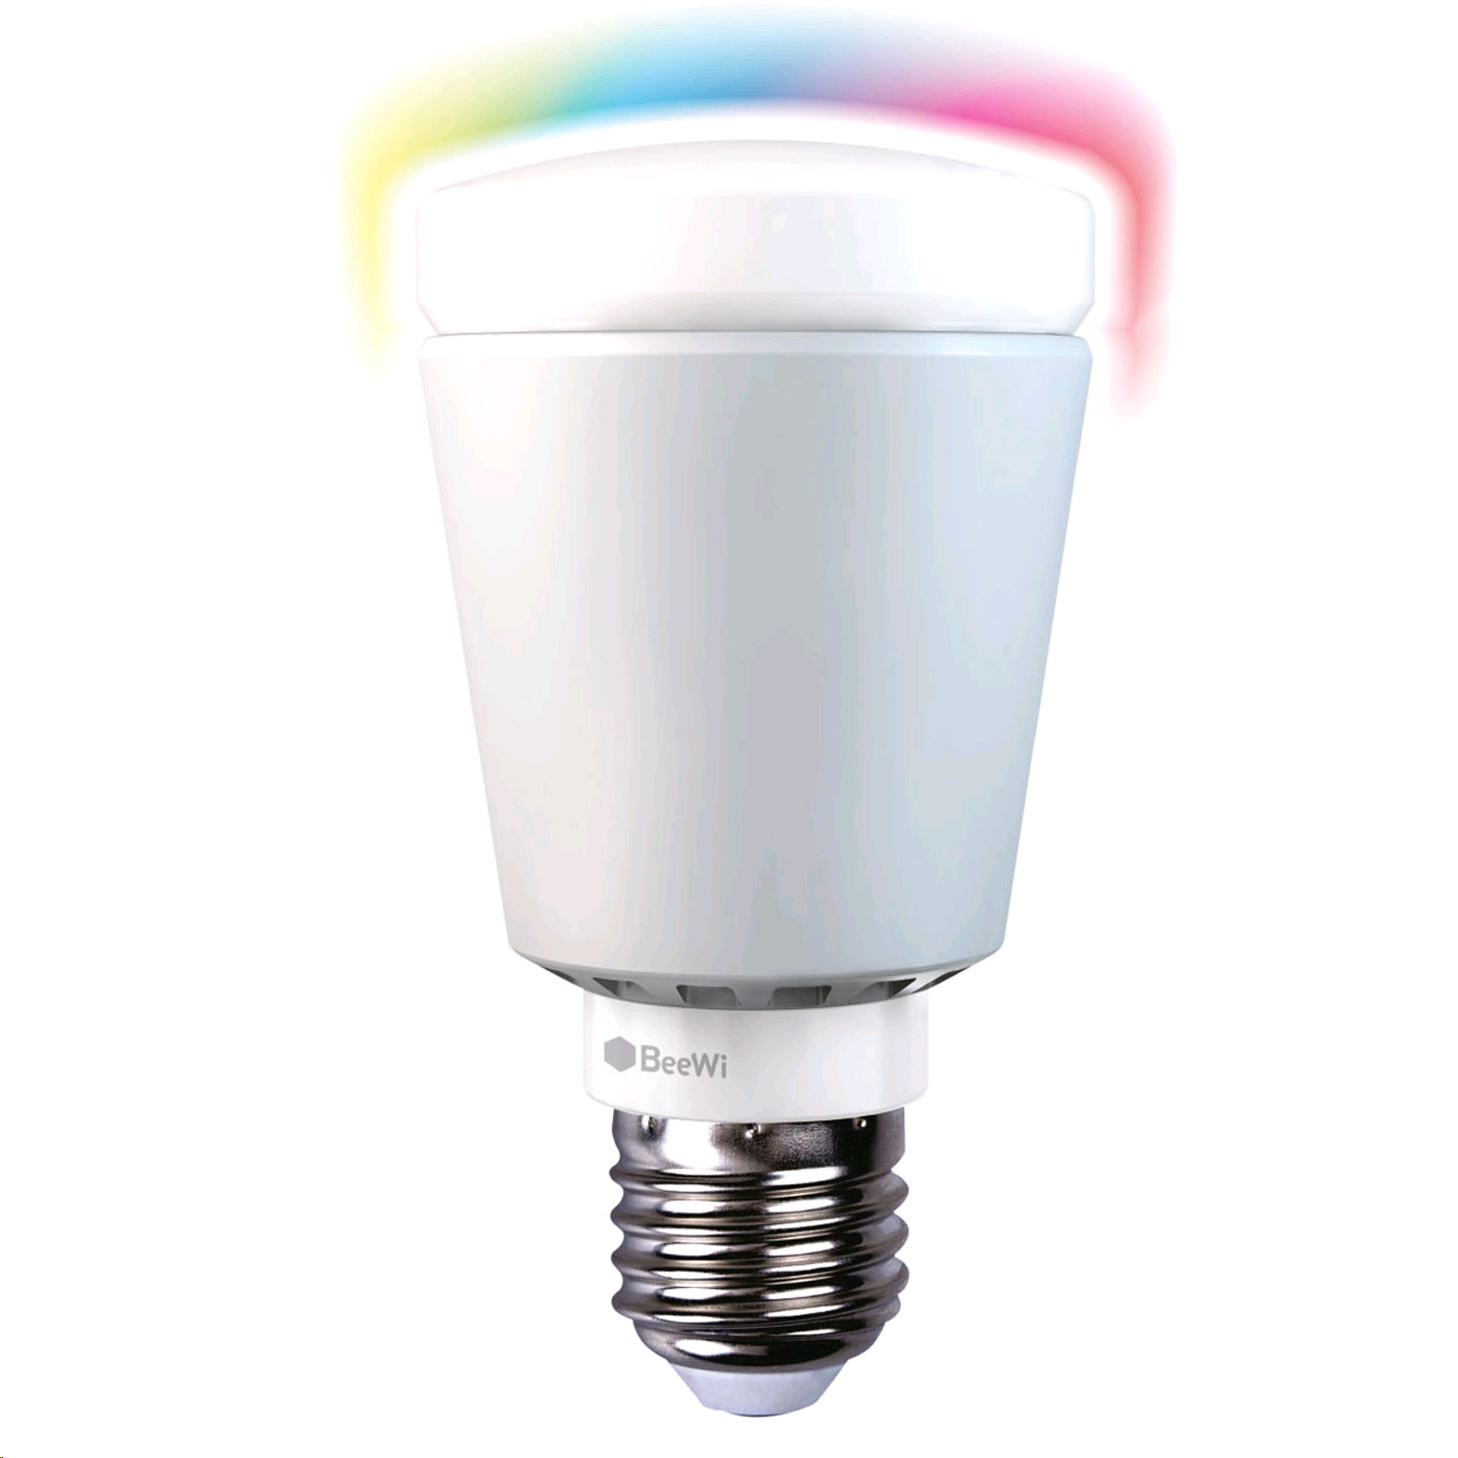  Bec Smart LED BeeWi BBL227A1 Bluetooth, Bulb E27, Multicolor 